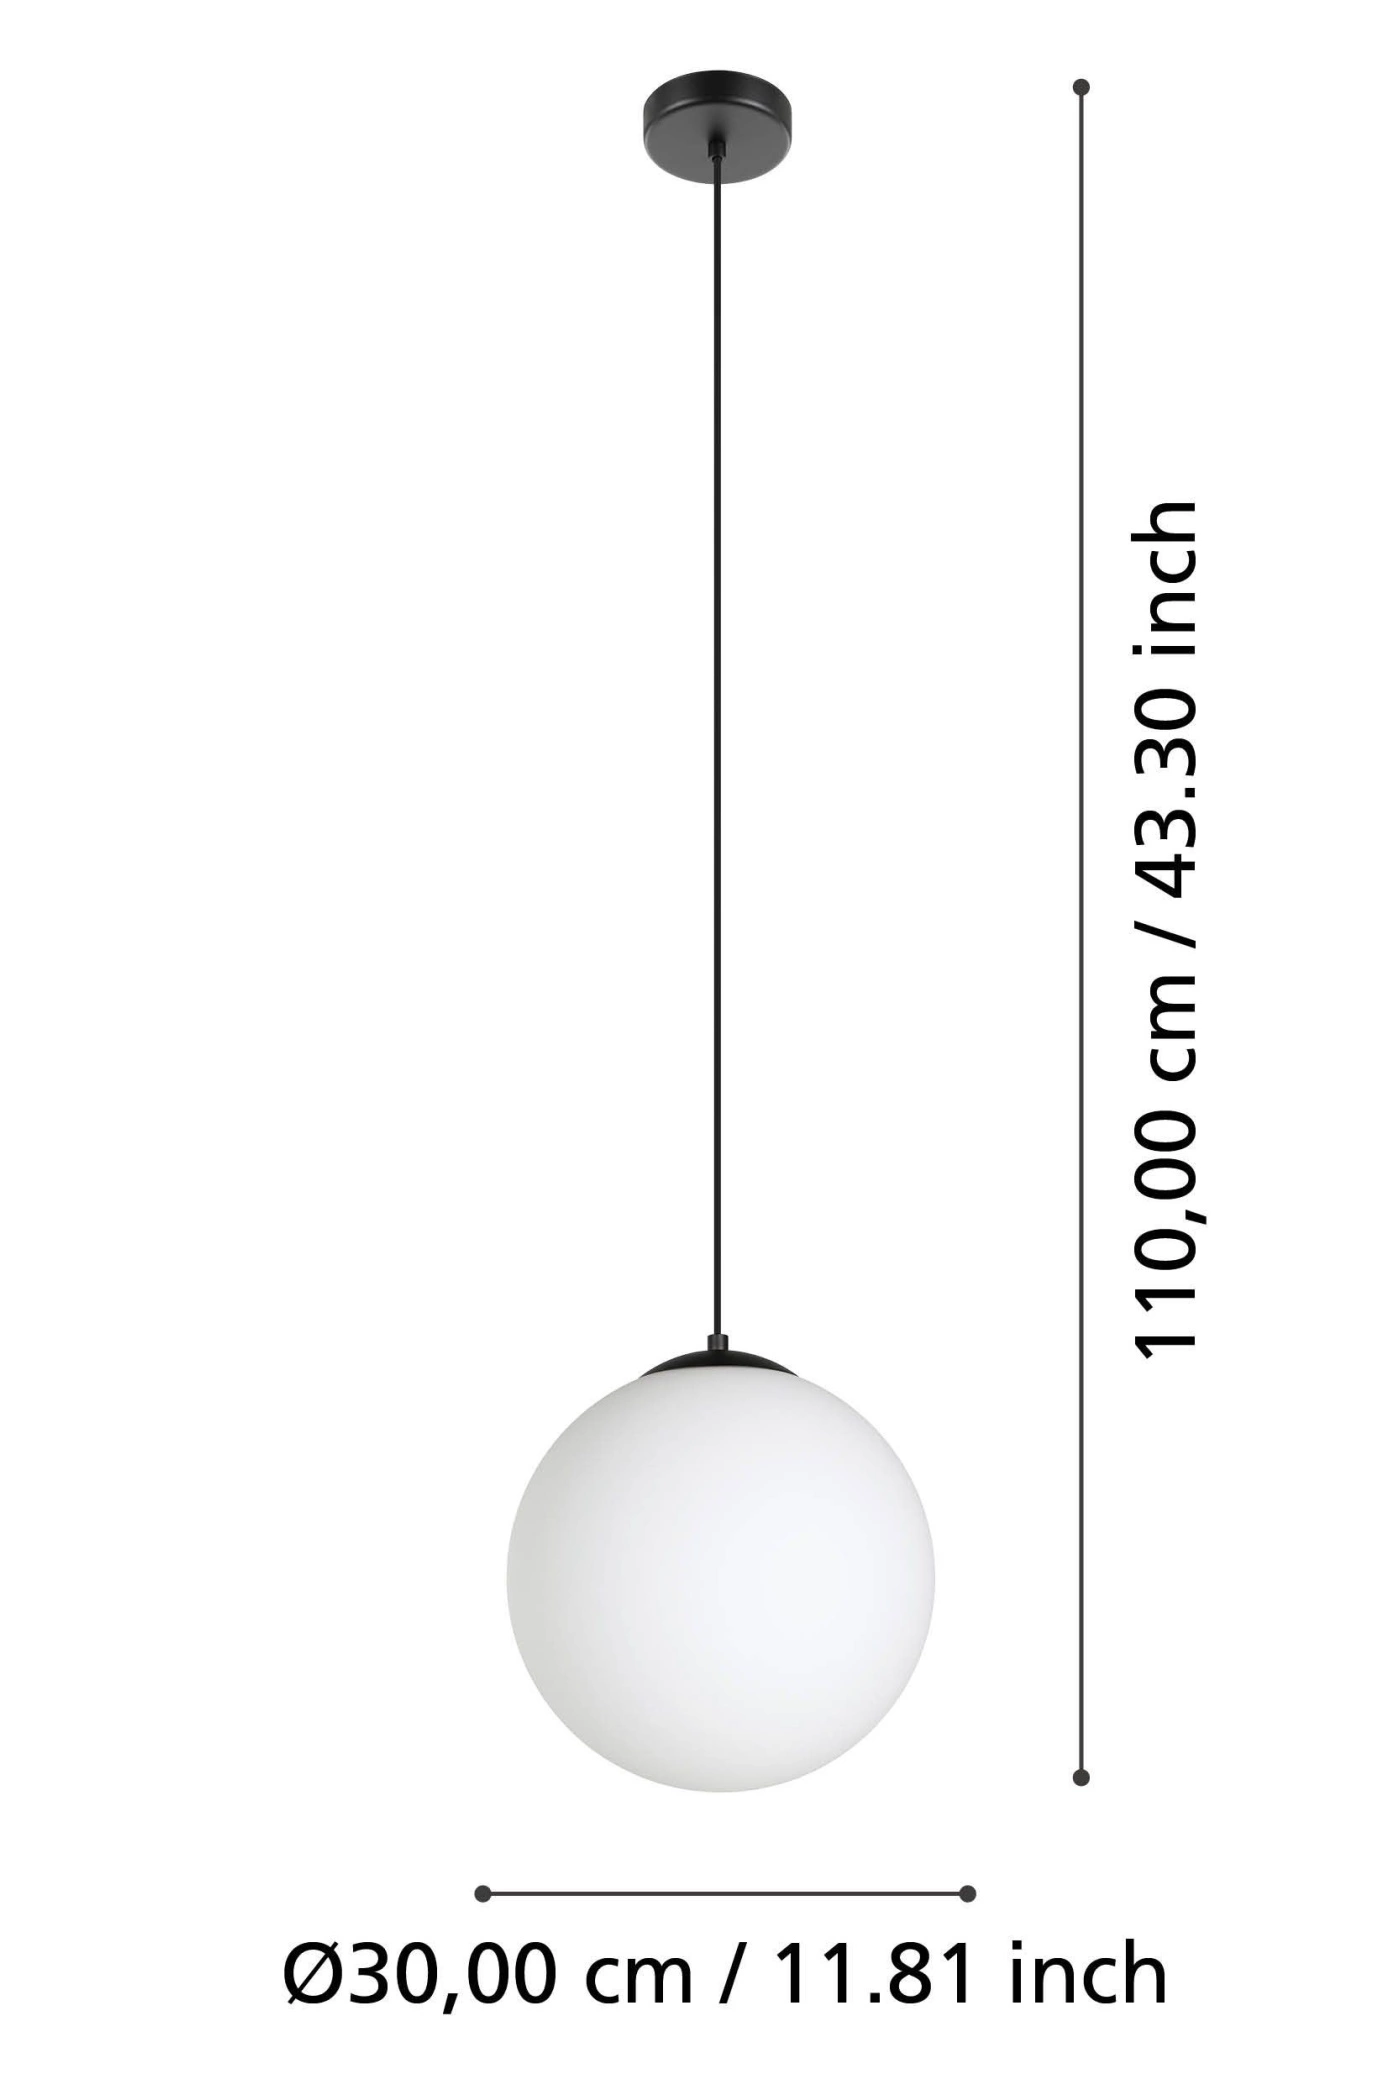   
                        
                        Люстра EGLO (Австрия) 53247    
                         в стиле Модерн.  
                        Тип источника света: светодиодная лампа, сменная.                         Форма: Шар.                         Цвета плафонов и подвесок: Белый.                         Материал: Стекло.                          фото 2